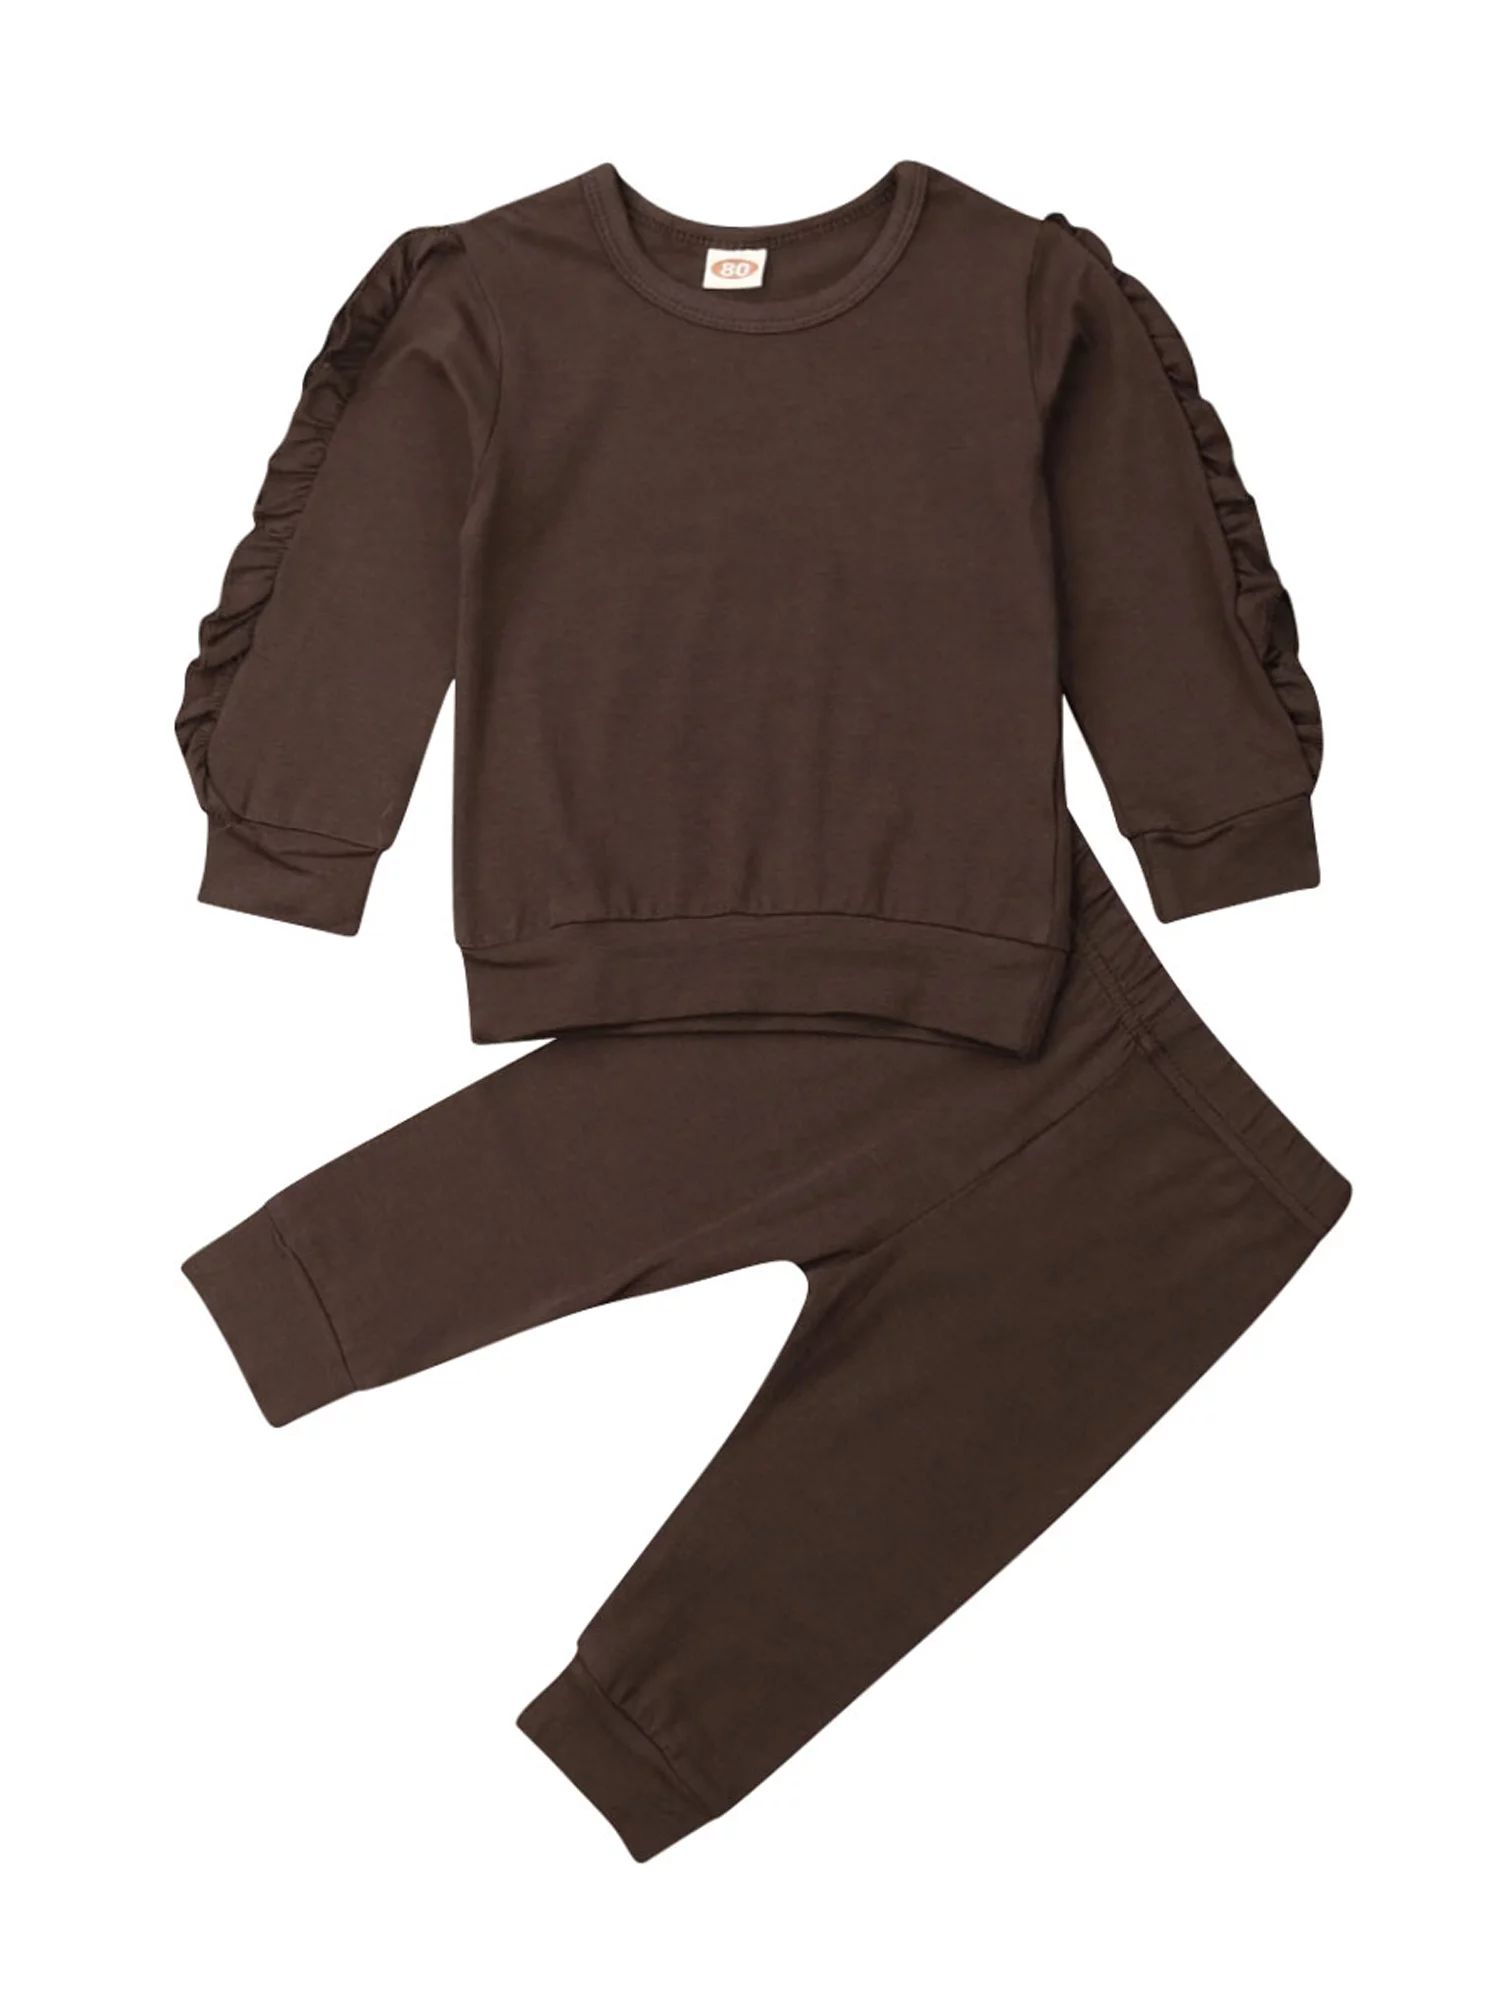 Baby Girls Autumn Clothes, Toddler Girl Long Sleeve Ruffle Tops Sweatsuit Pants 2Pcs Outfits Set | Walmart (US)